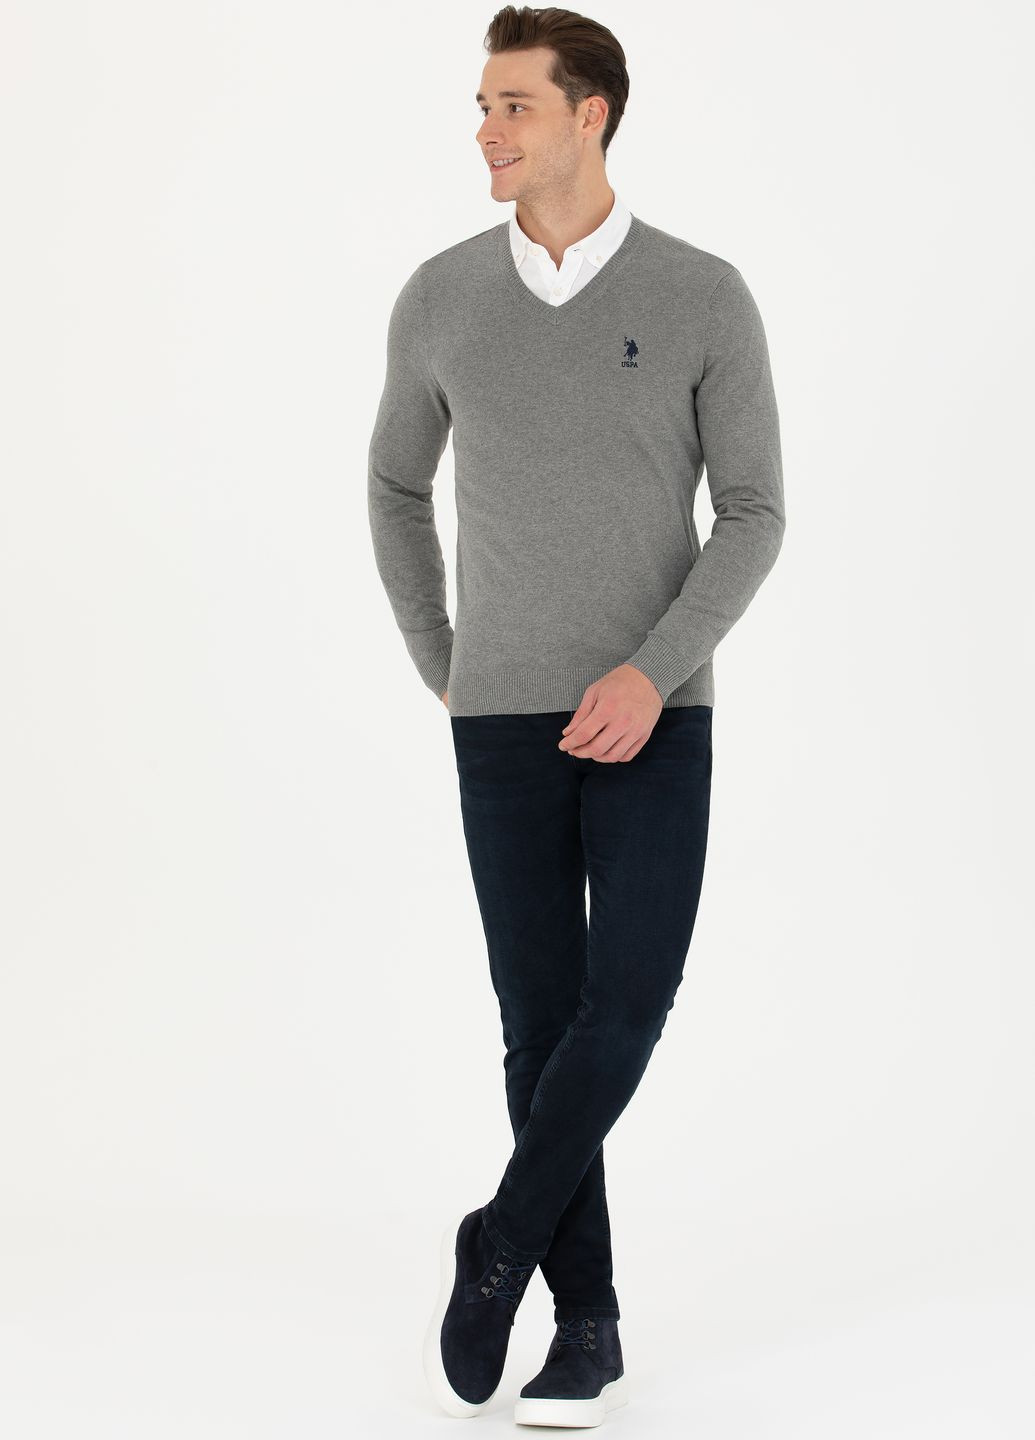 Светло-серый свитер мужской U.S. Polo Assn.